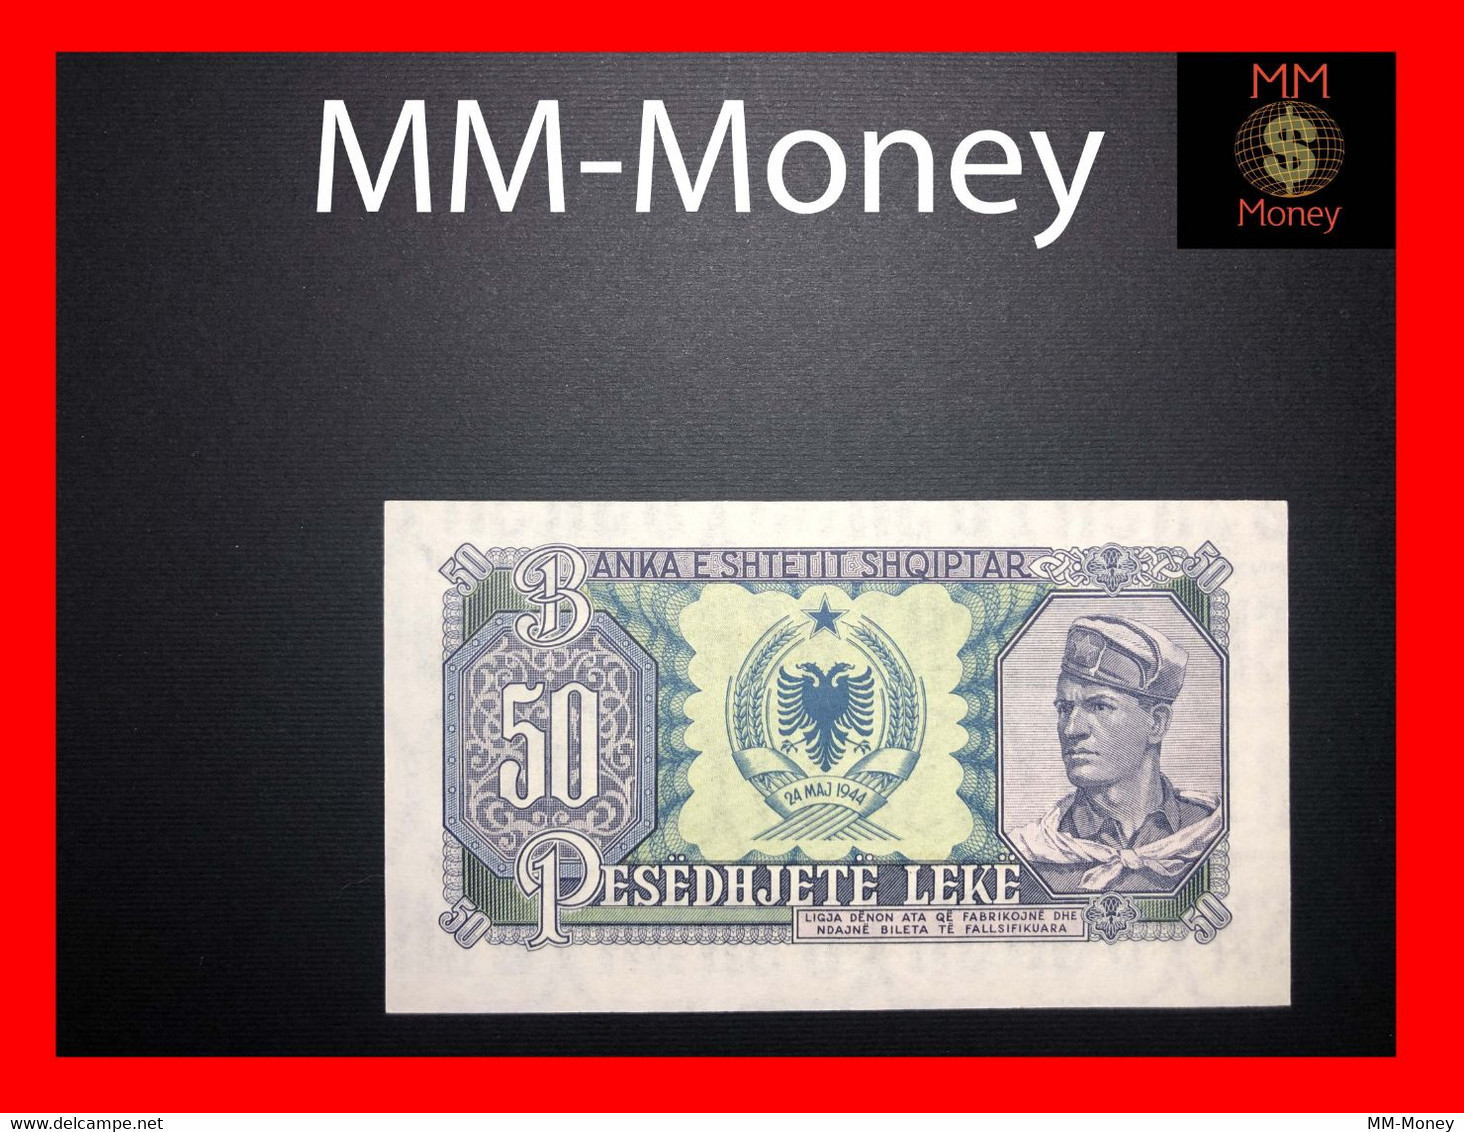 Albania 50 Leke 1957 P. 29 UNC   [MM-Money] - Albania